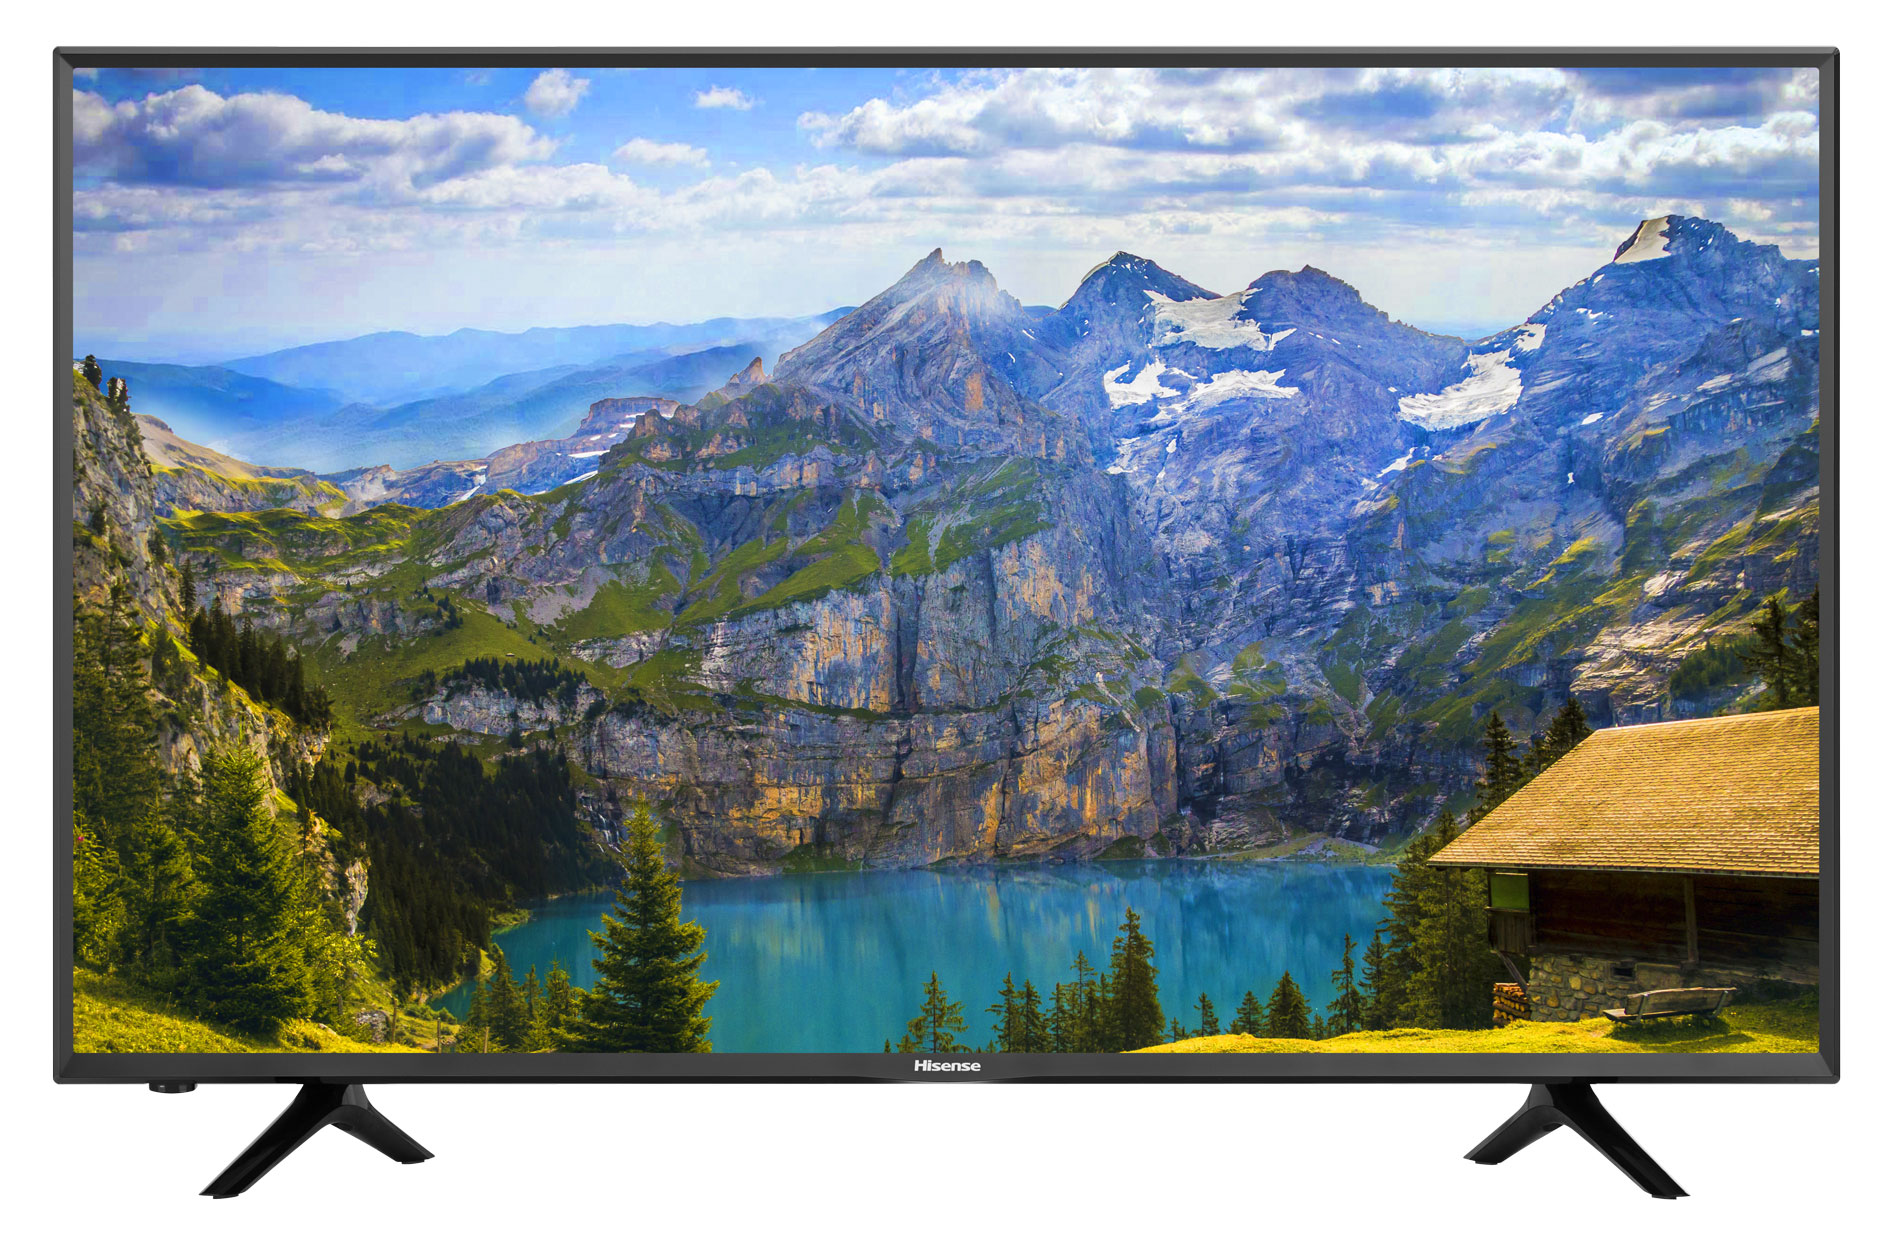 Hisense 65 Inch Ultra HD DLED Smart TV Black - 65N3000UW